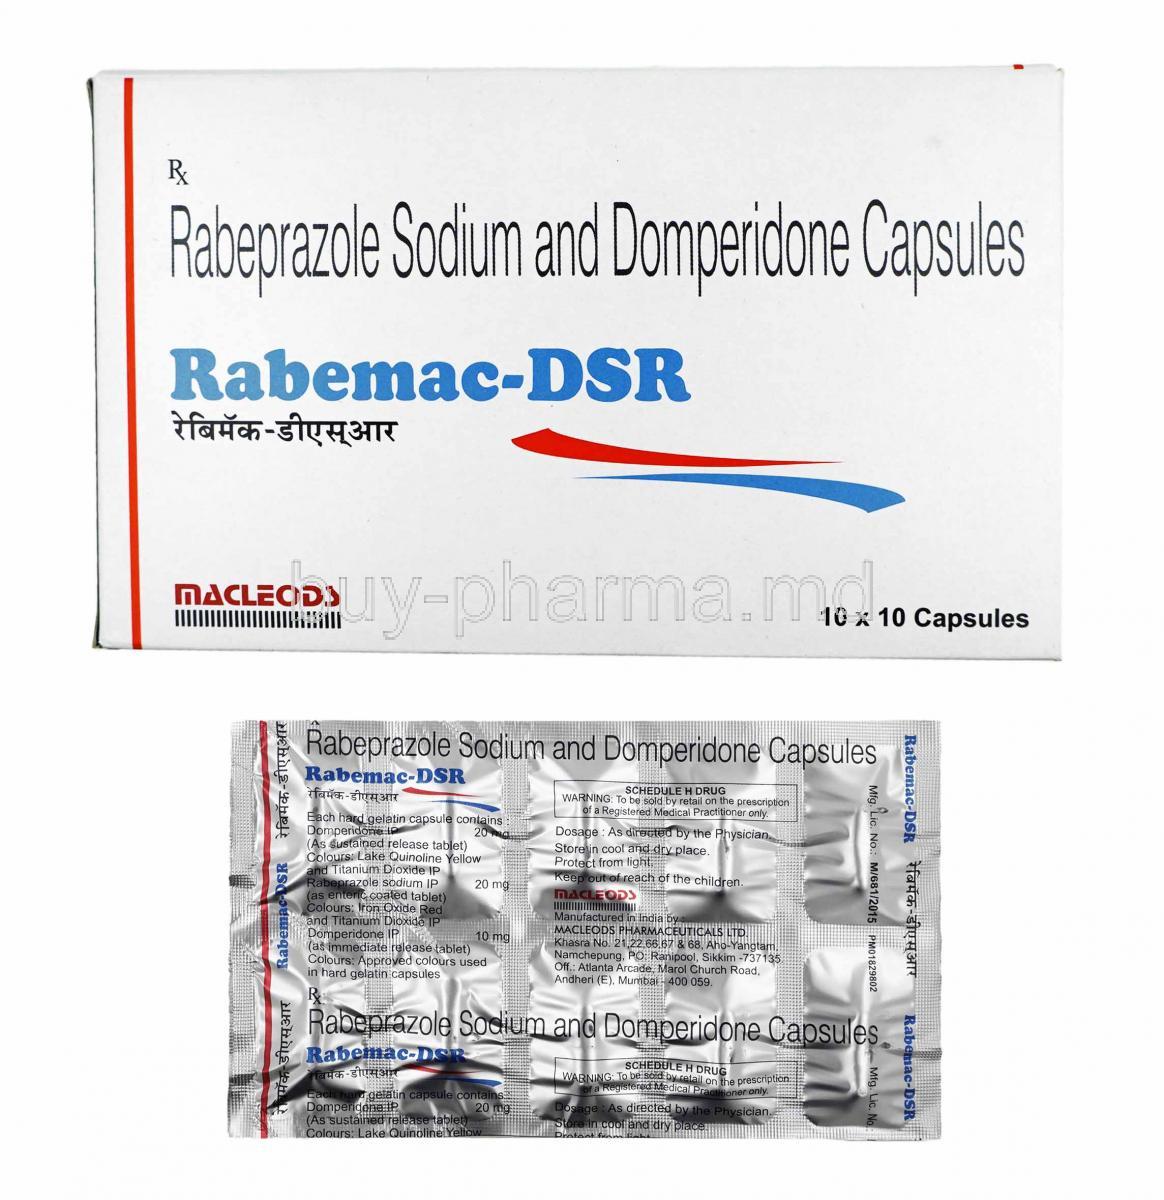 Rabemac-DSR, Domperidone and Rabeprazole box and capsules